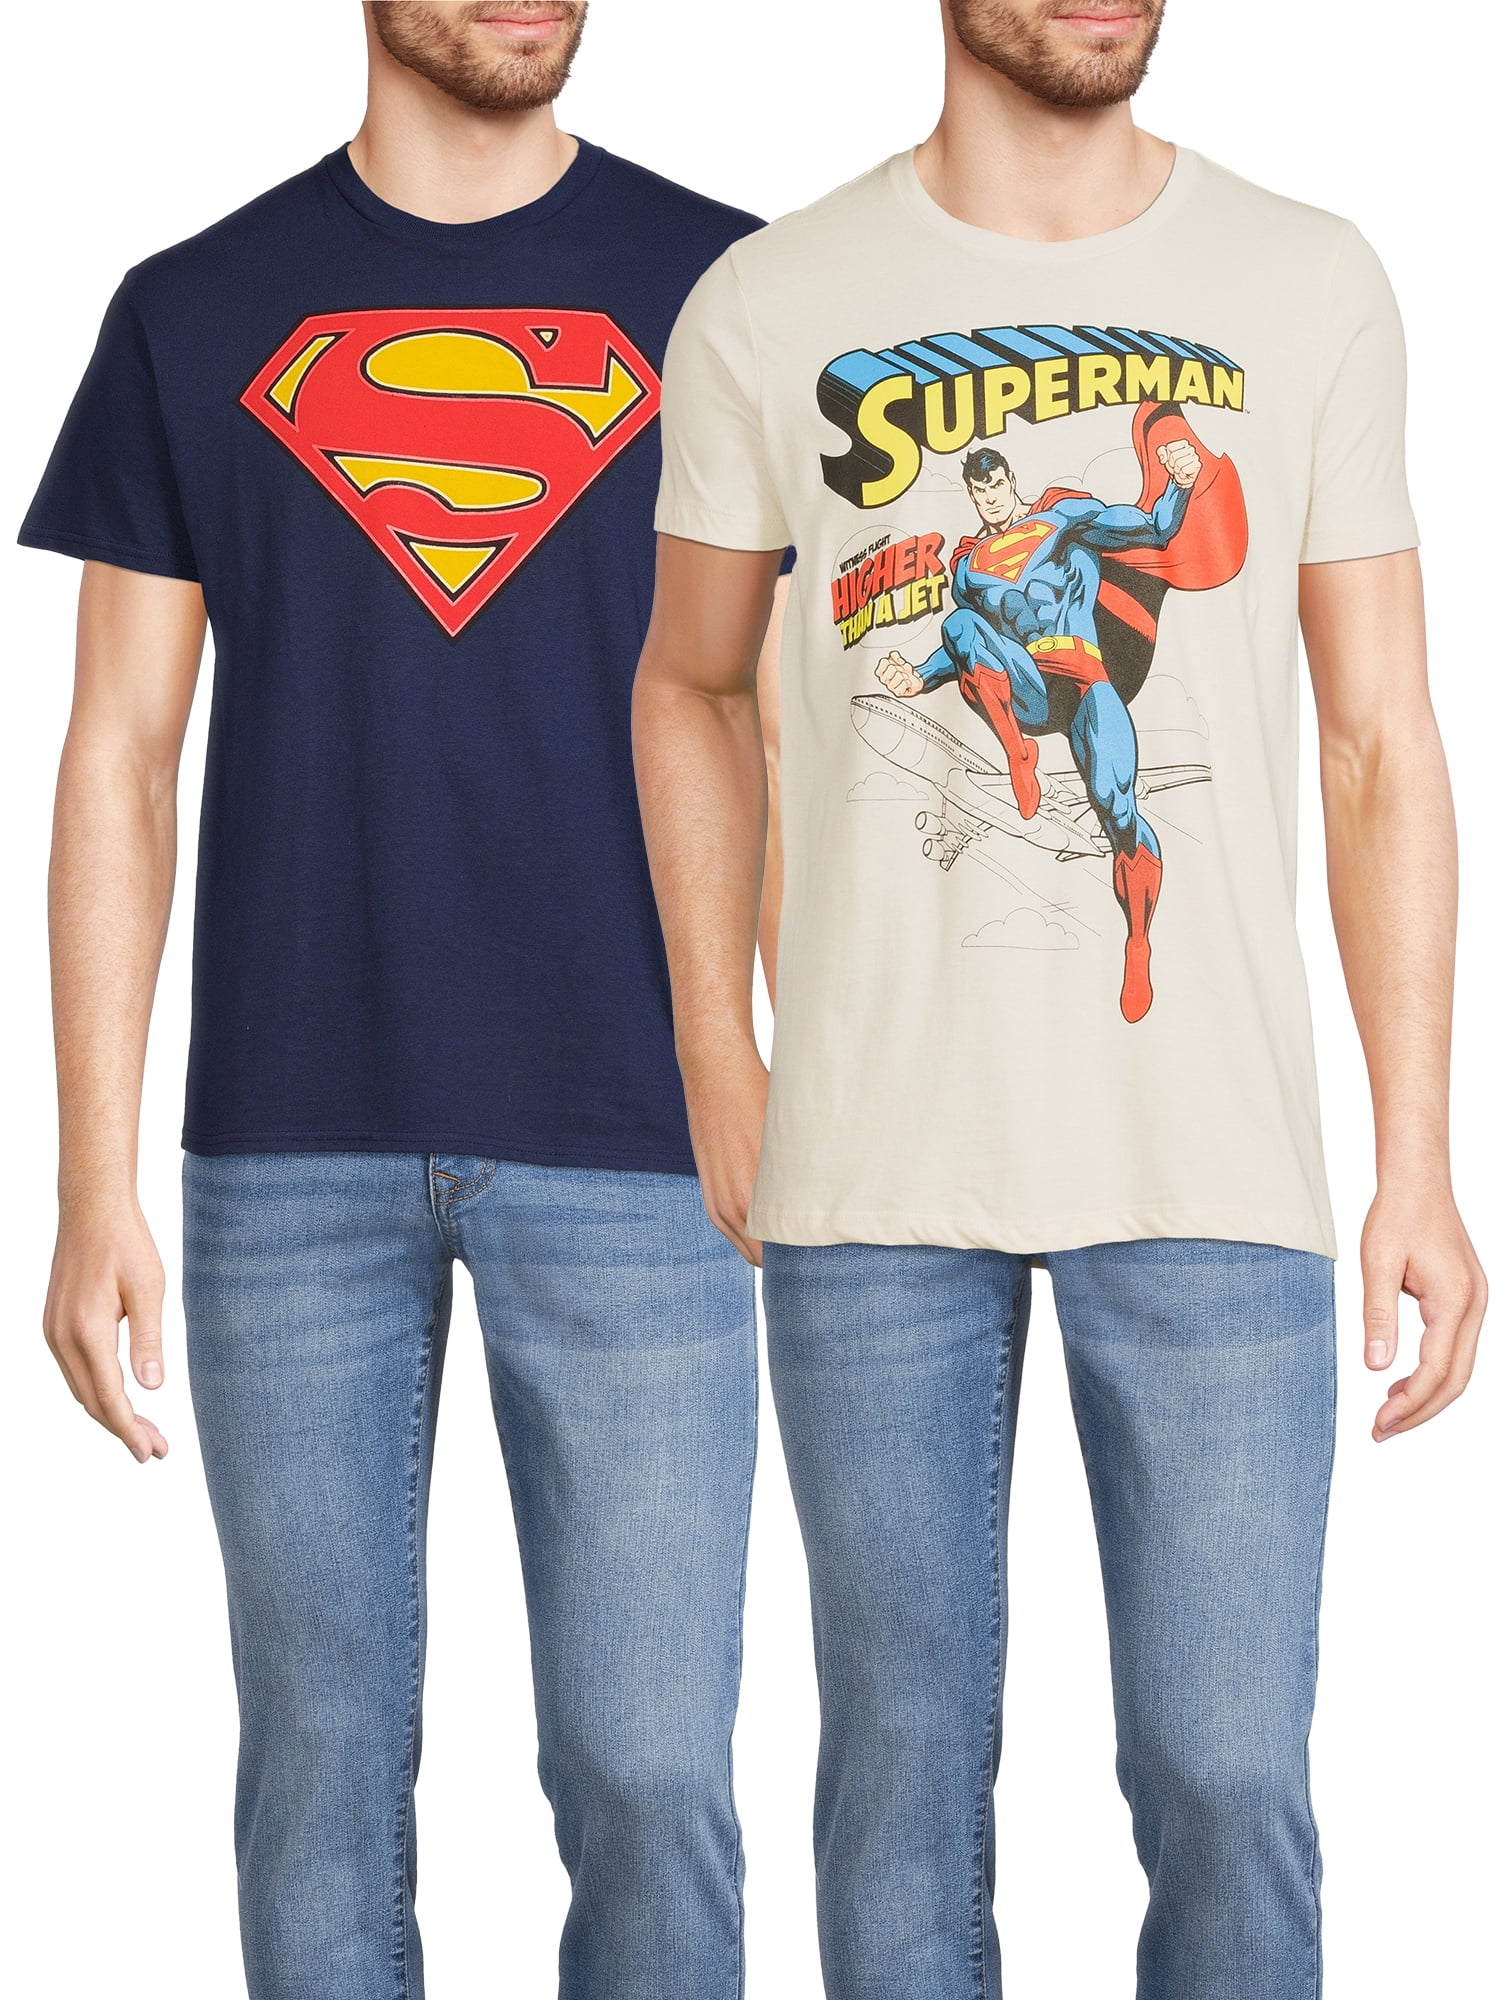 Boys Girls Kids DC Comics Superman Character T-Shirt Tee Super man hero 